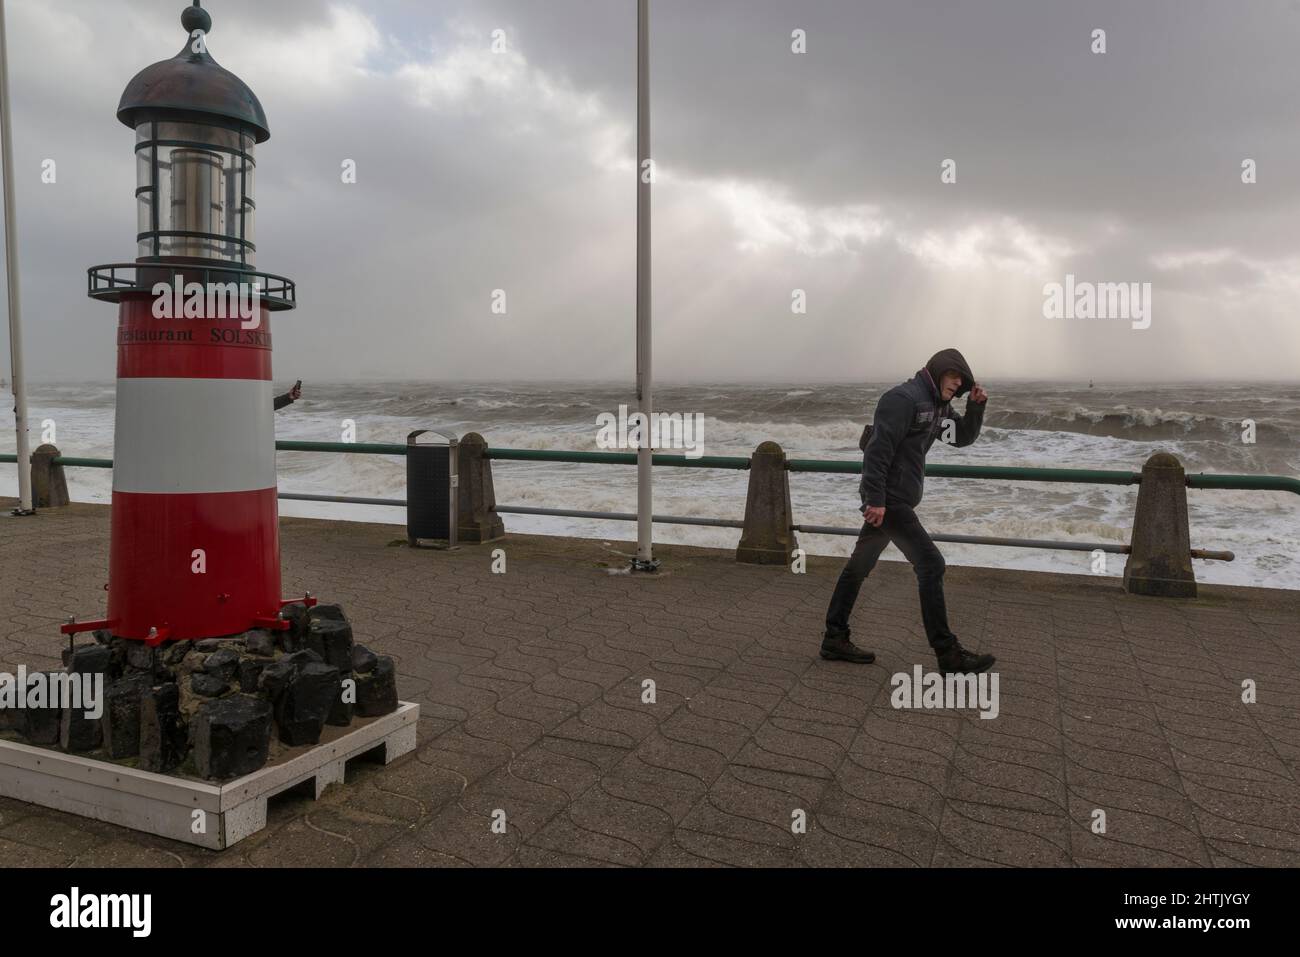 Man braving the intense storm Eunice on the boulevard of Vlissingen, Zeeland, Netherlands Stock Photo